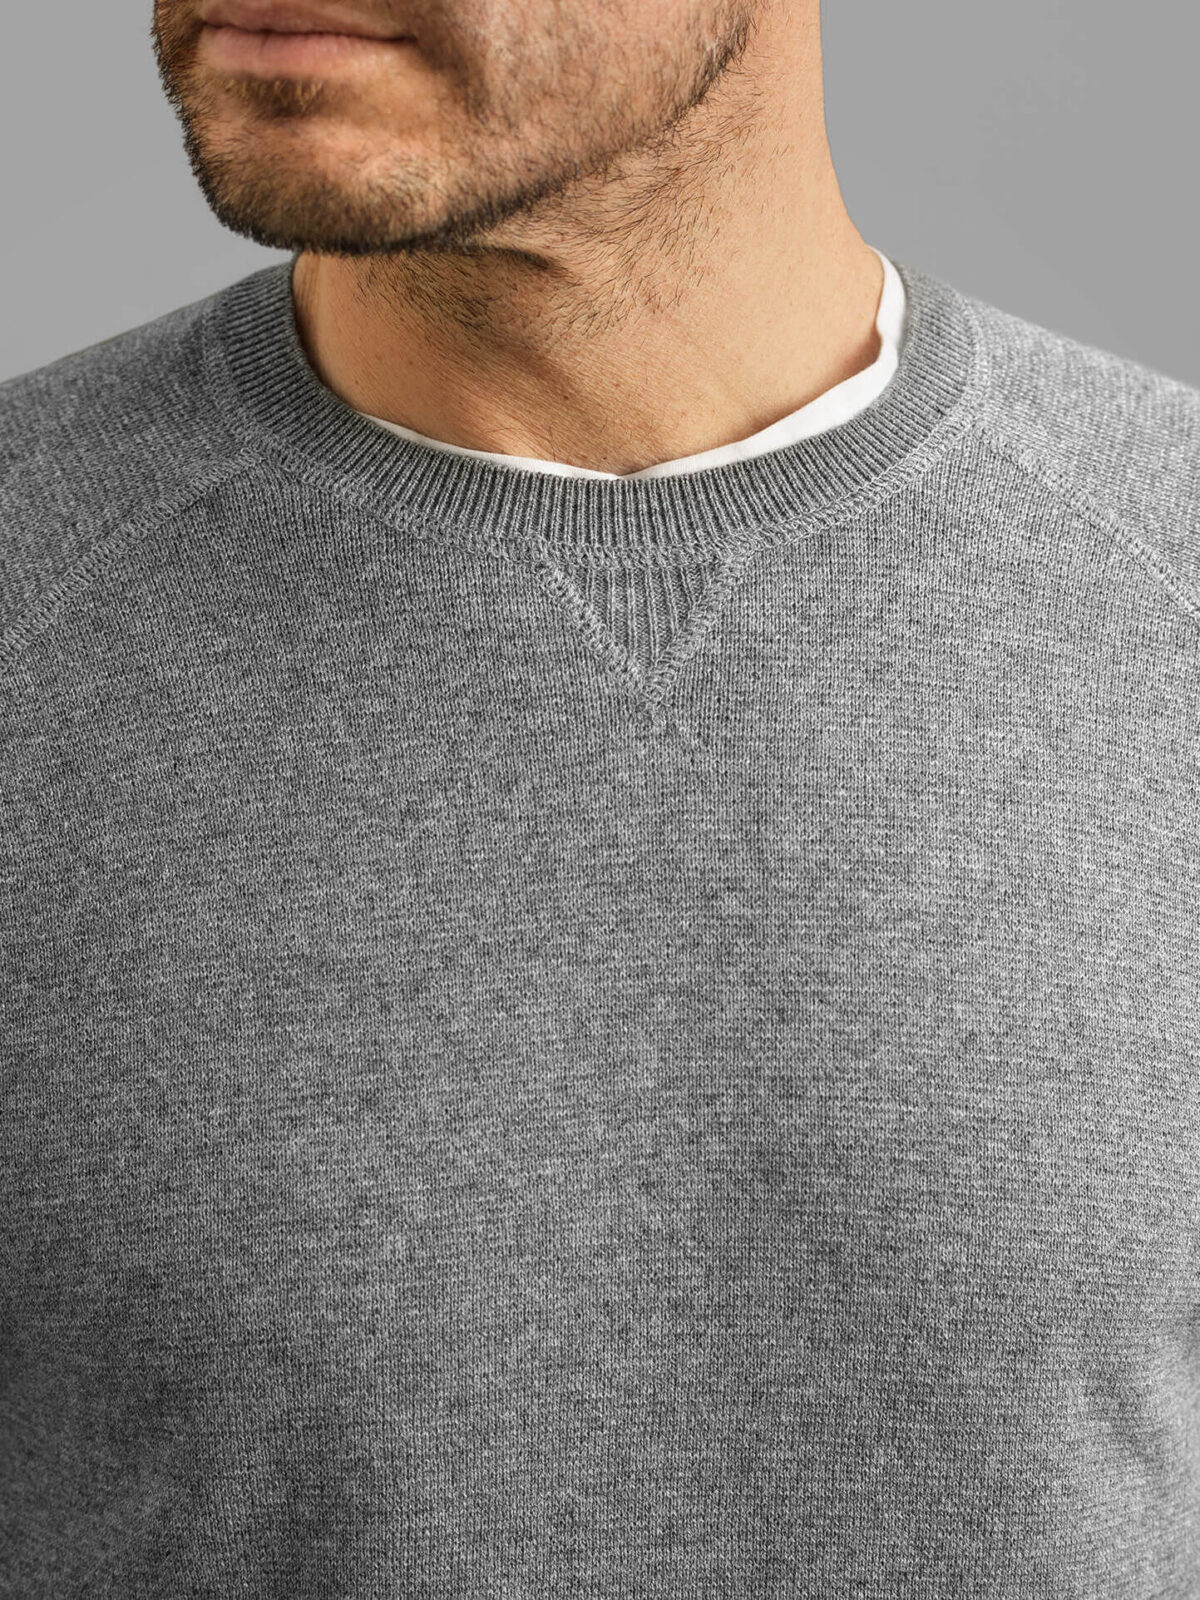 Grey Wool and Cotton Raglan Crewneck Sweater